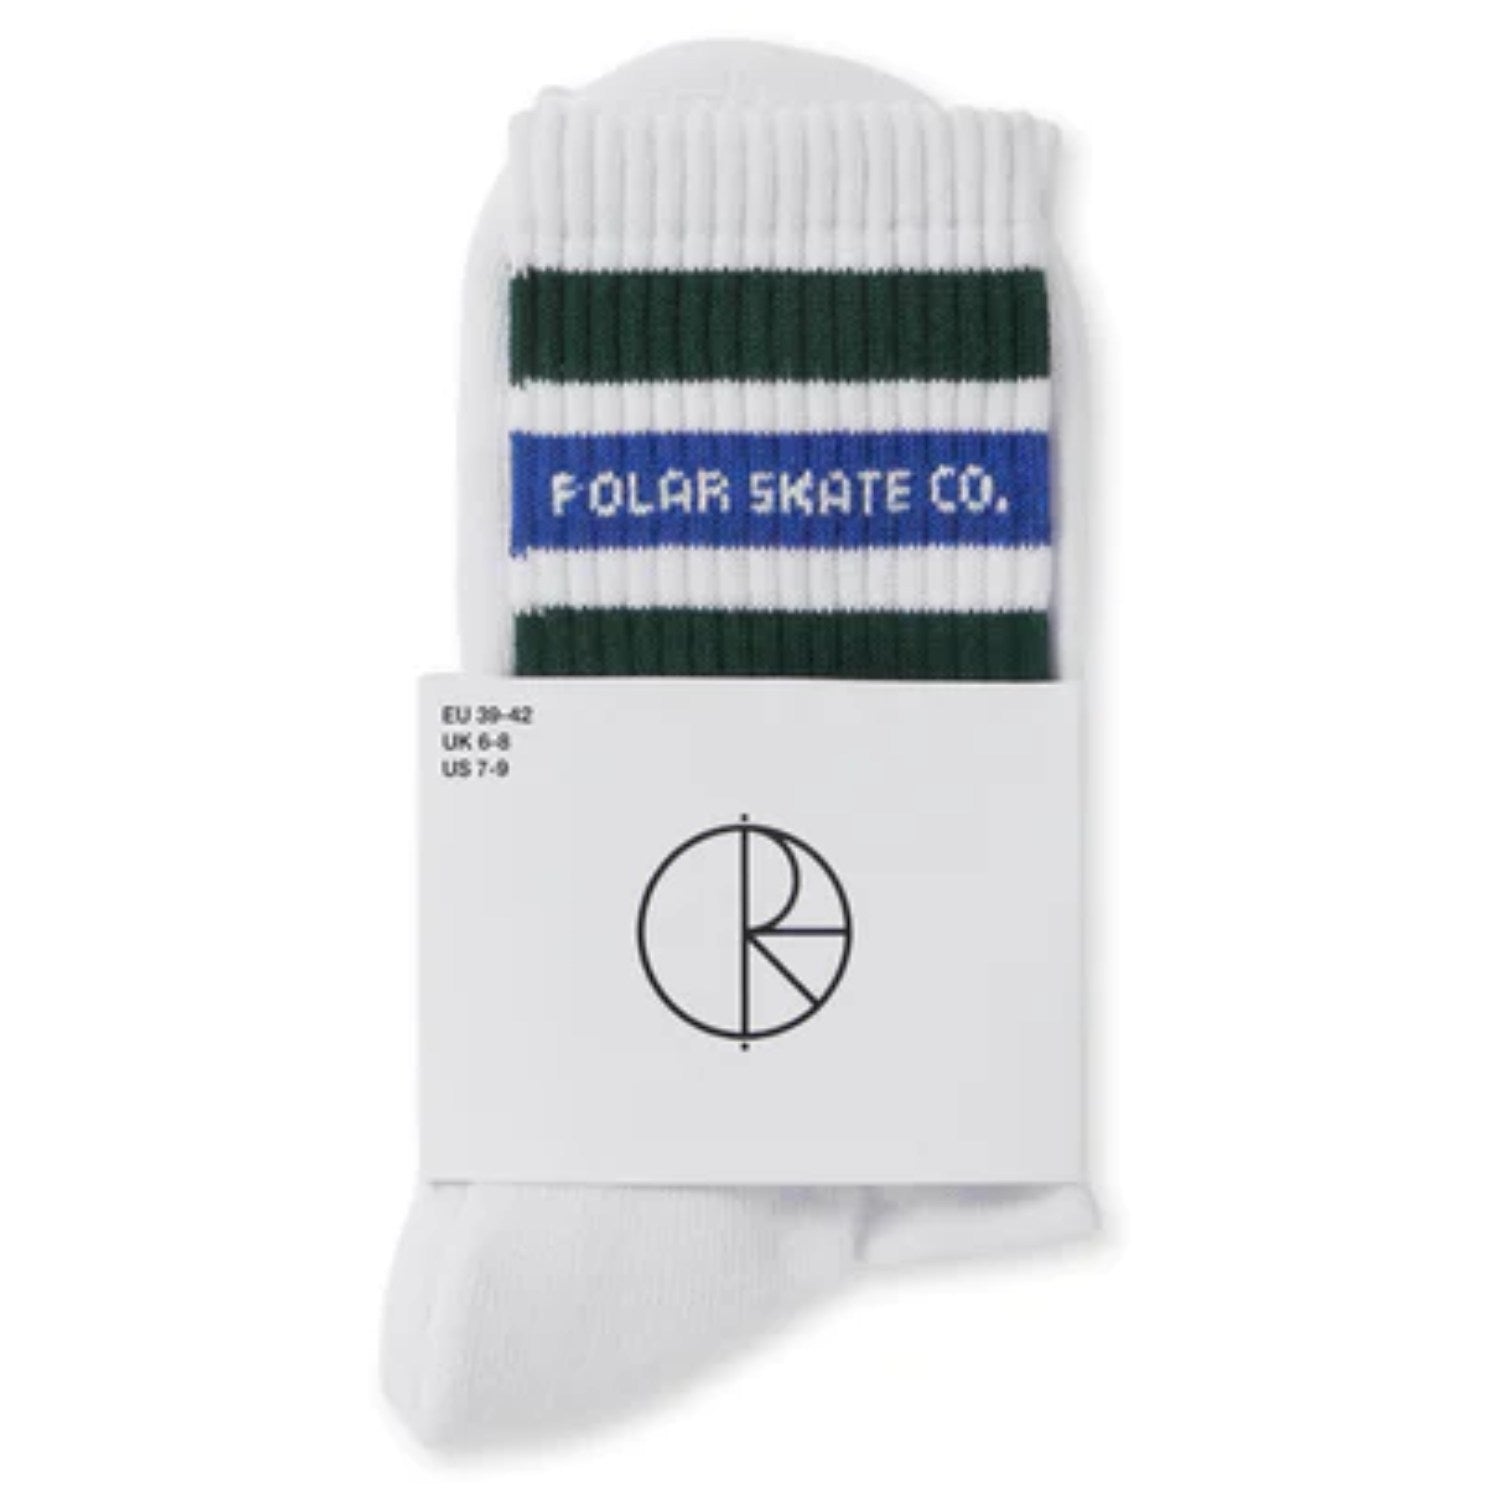 Polar Fat Stripe Socks - White / Green / Blue